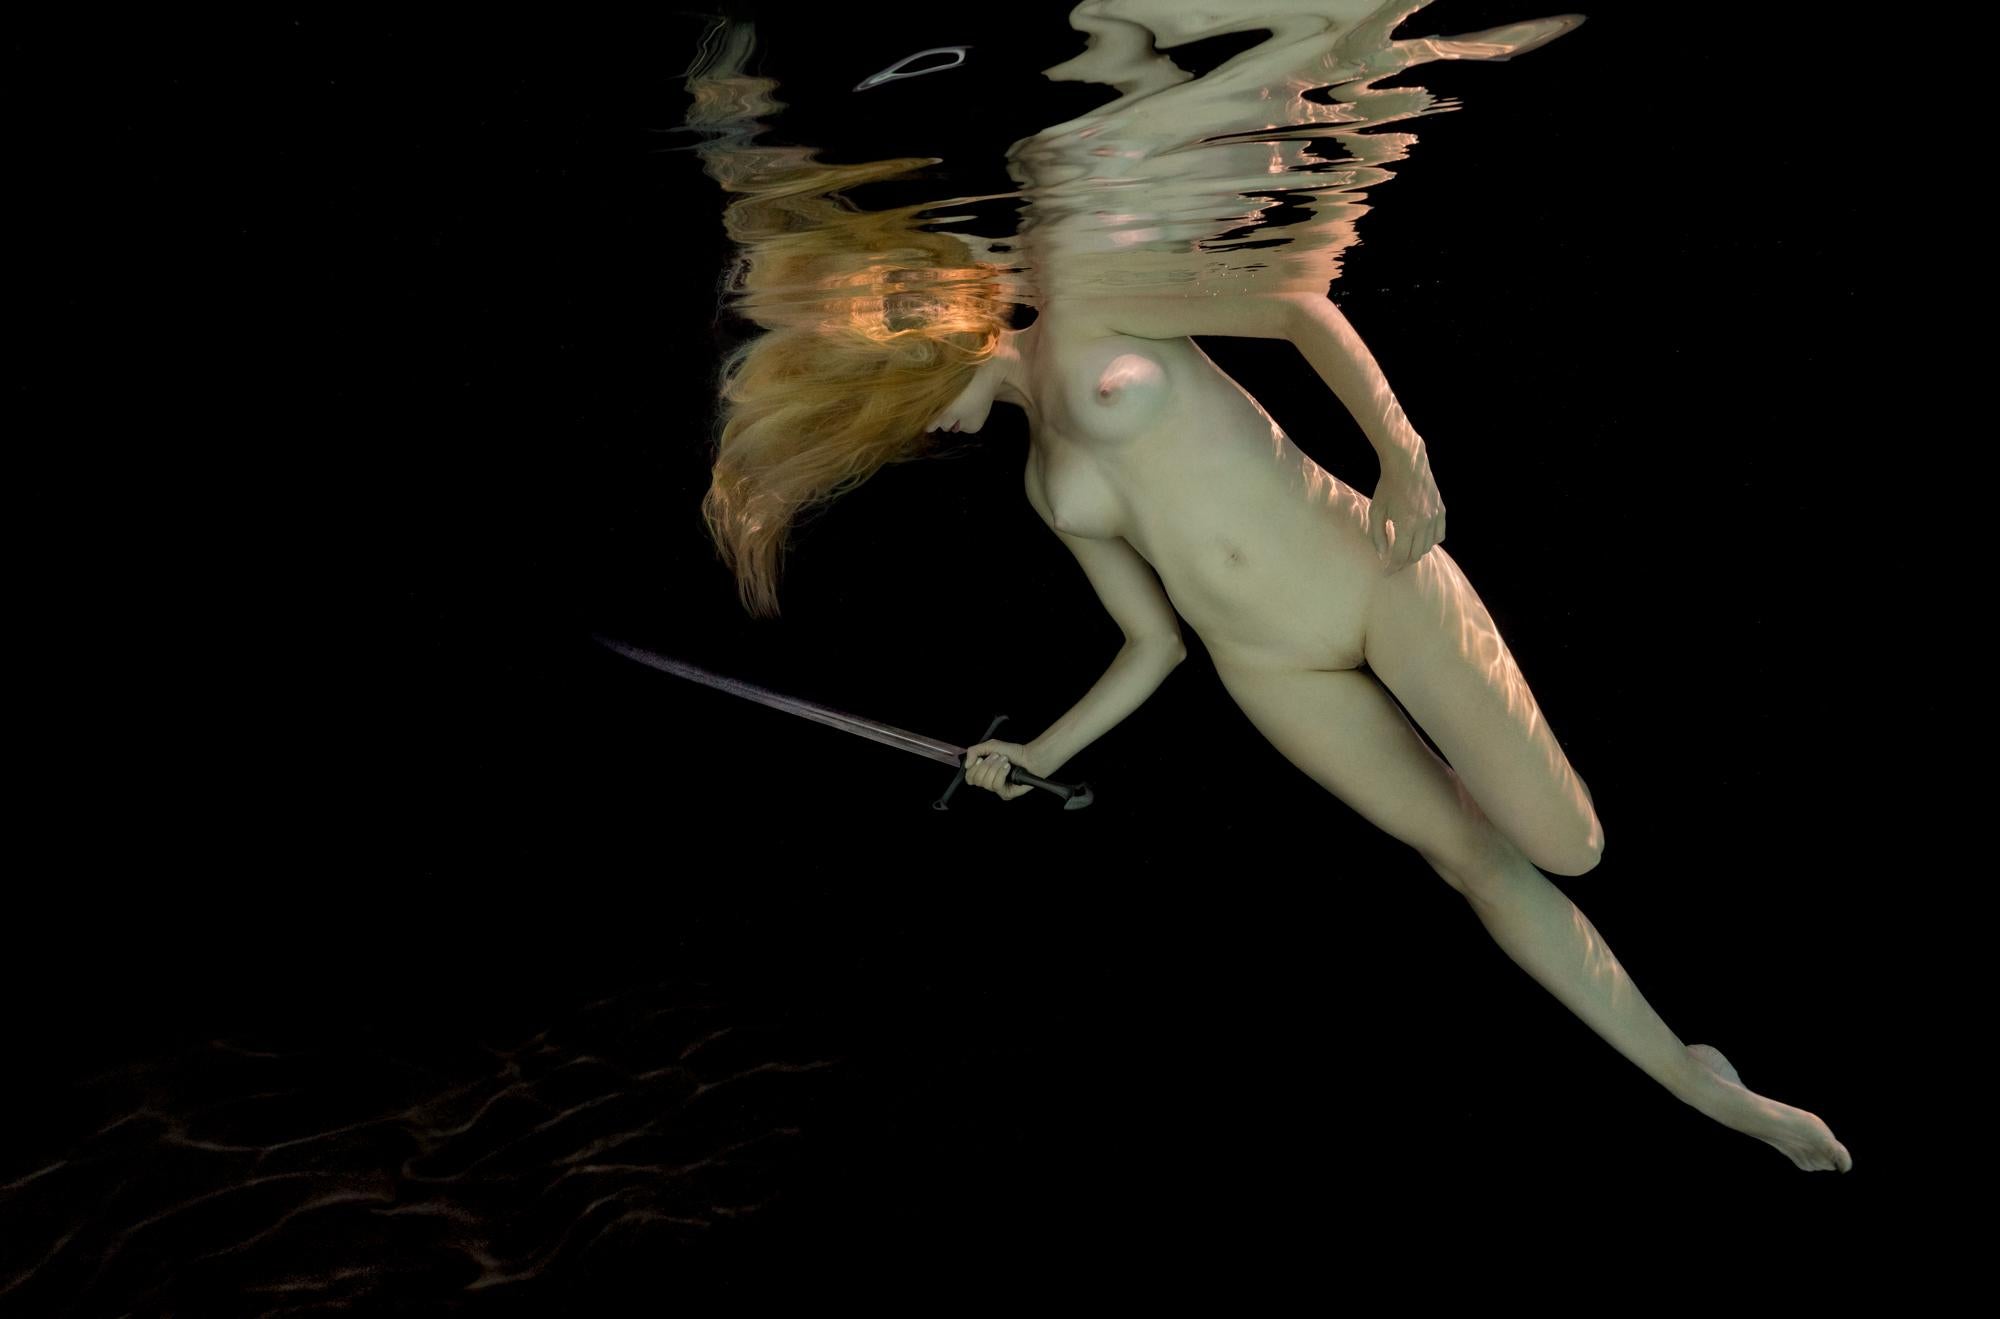 Athena - underwater nude photograph - archival pigment print 18" x 24"